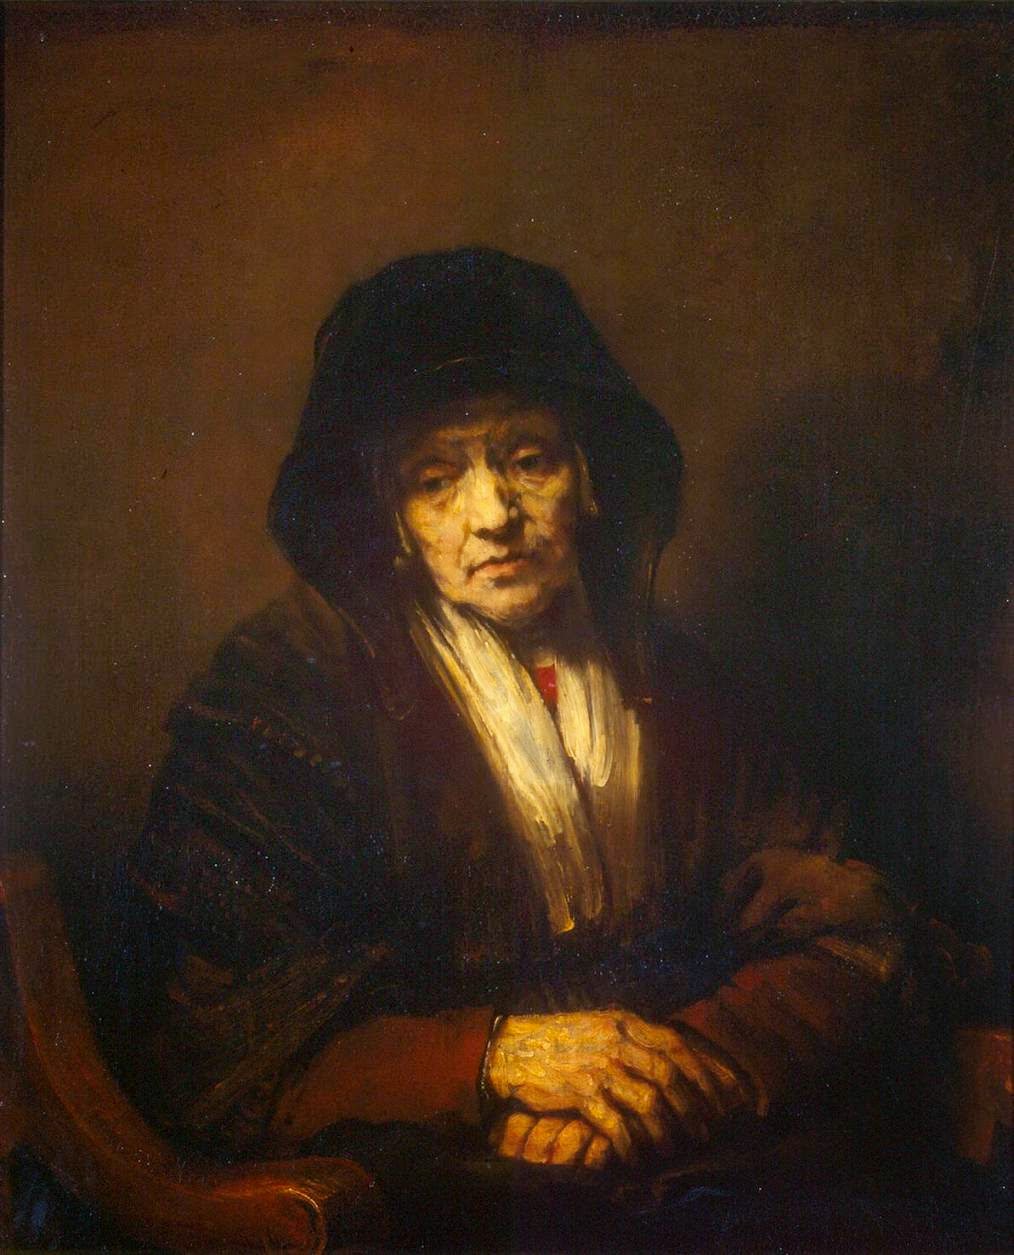 ART & ARTISTS: Rembrandt – part 12